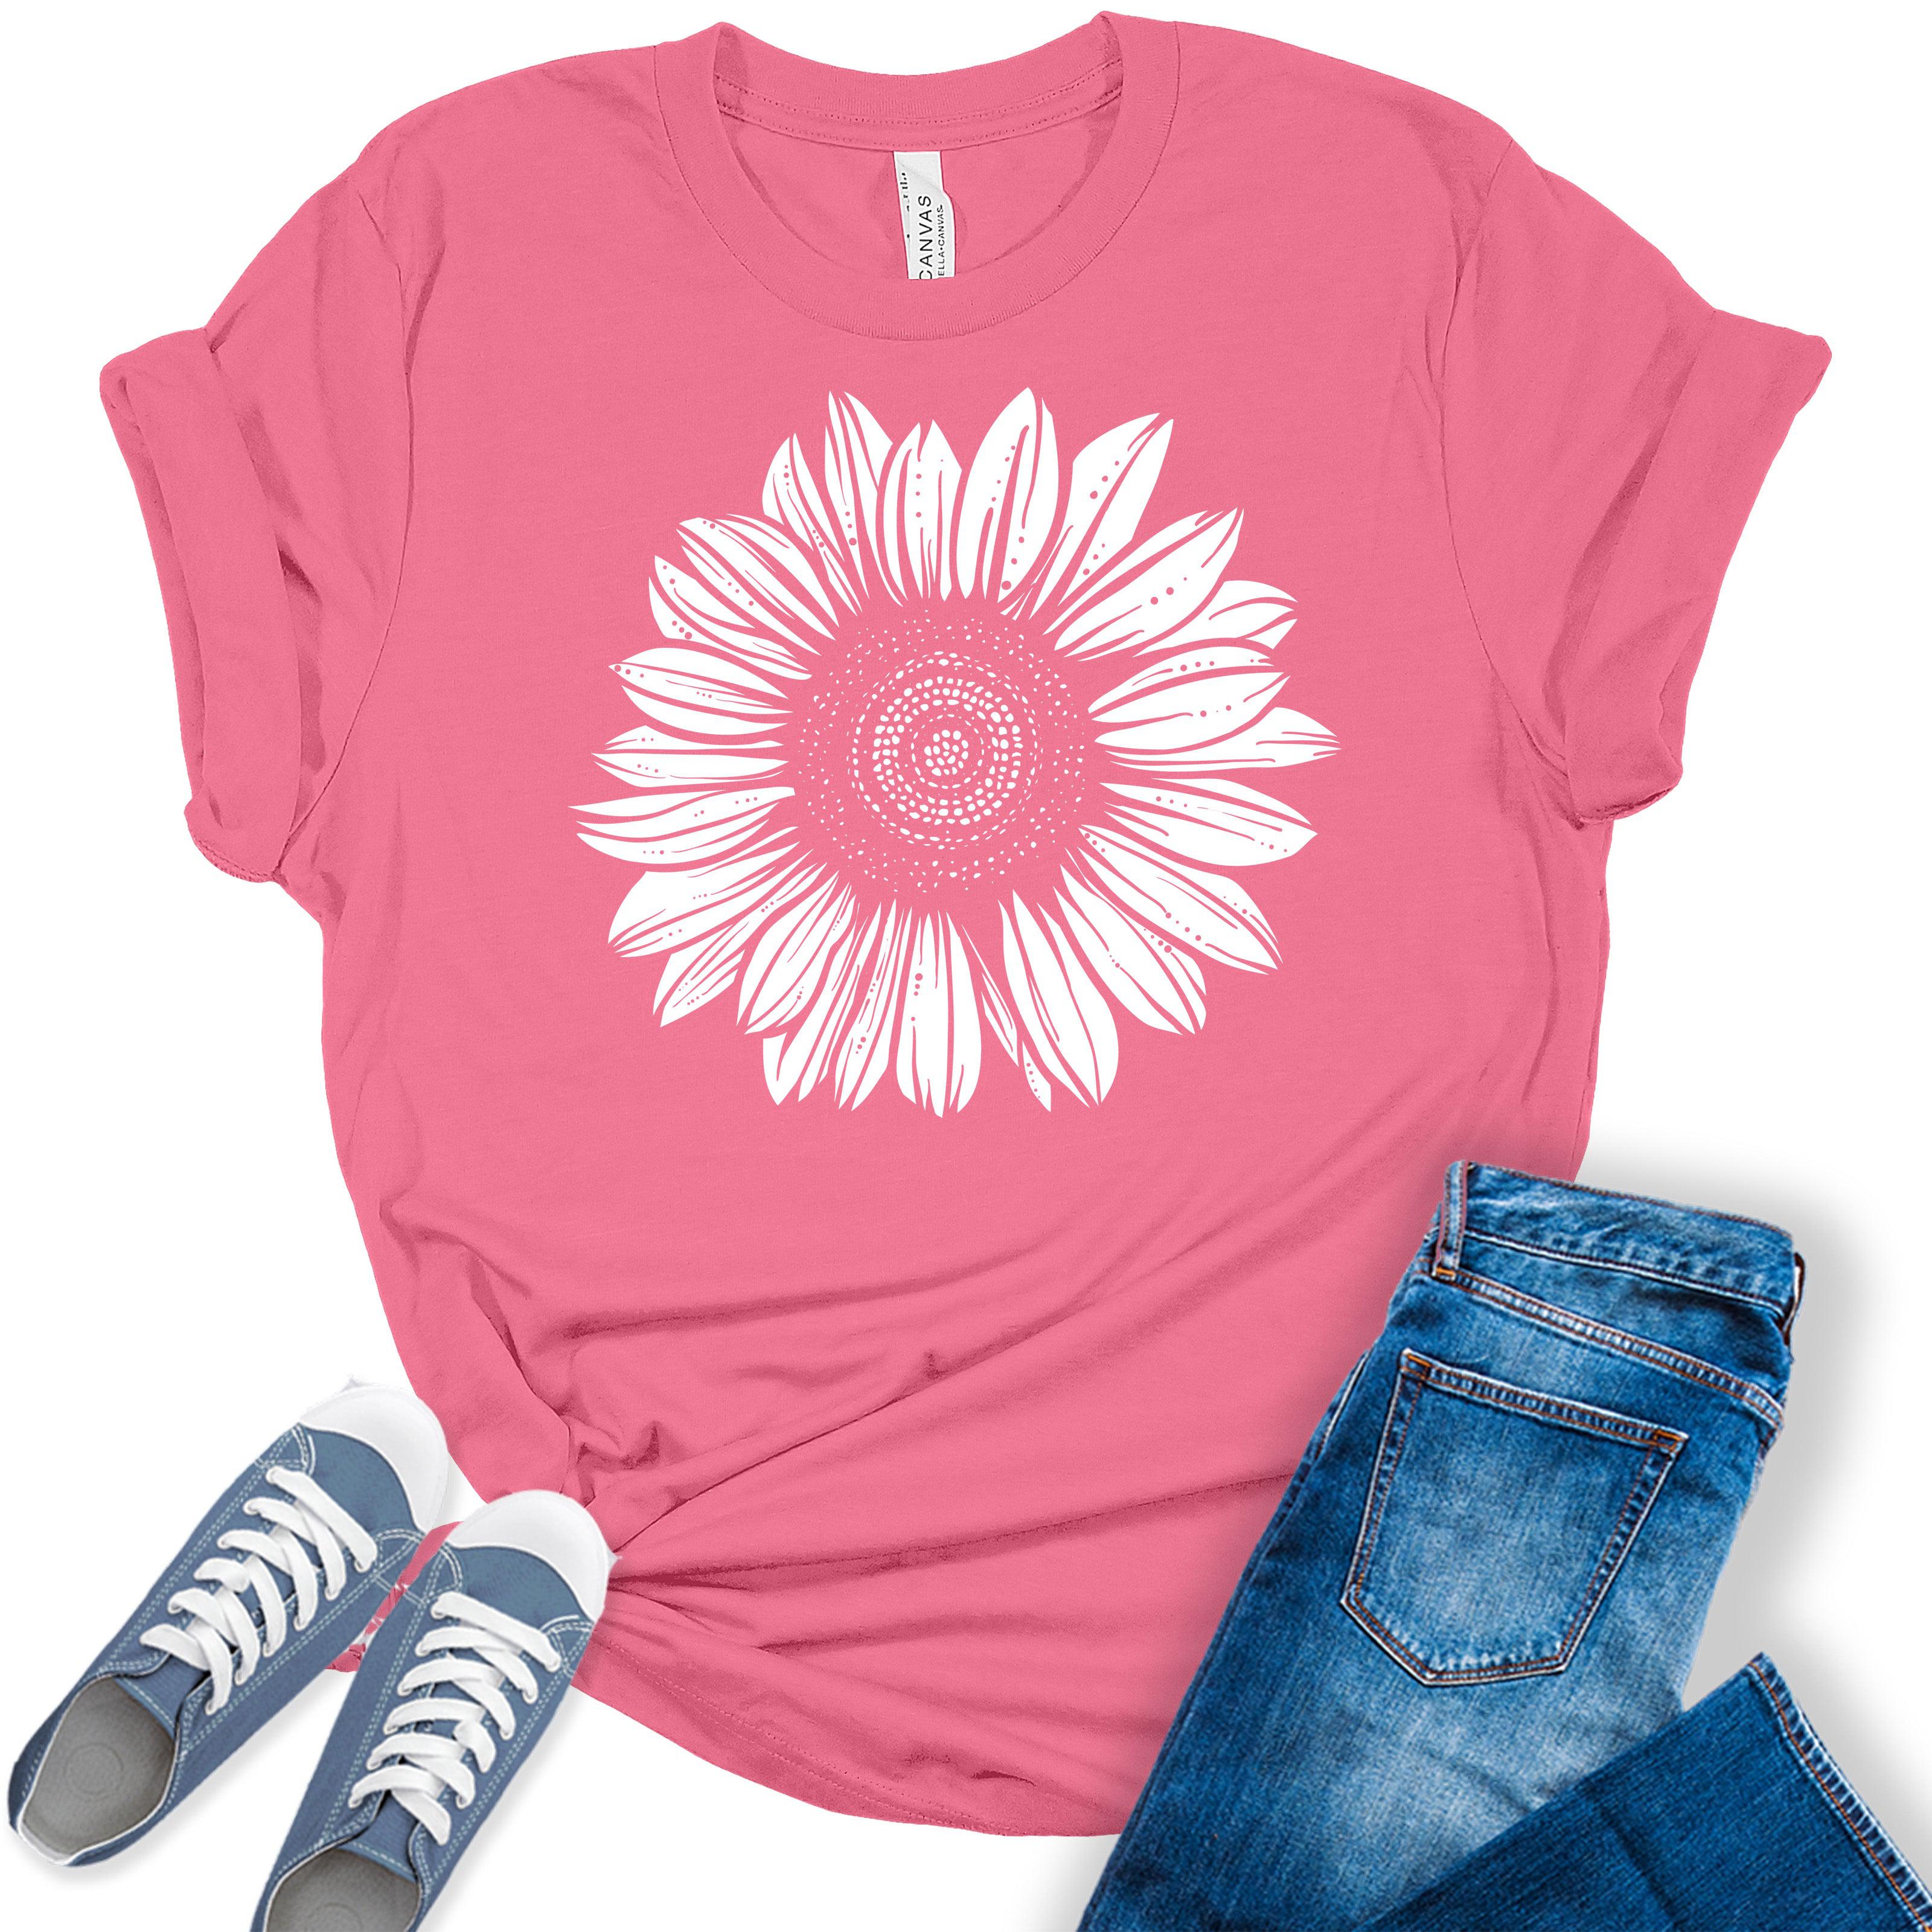 Casual Size Plus Top – Women\'s Summer Shirt Graphic Sunflower GyftWear T Tee